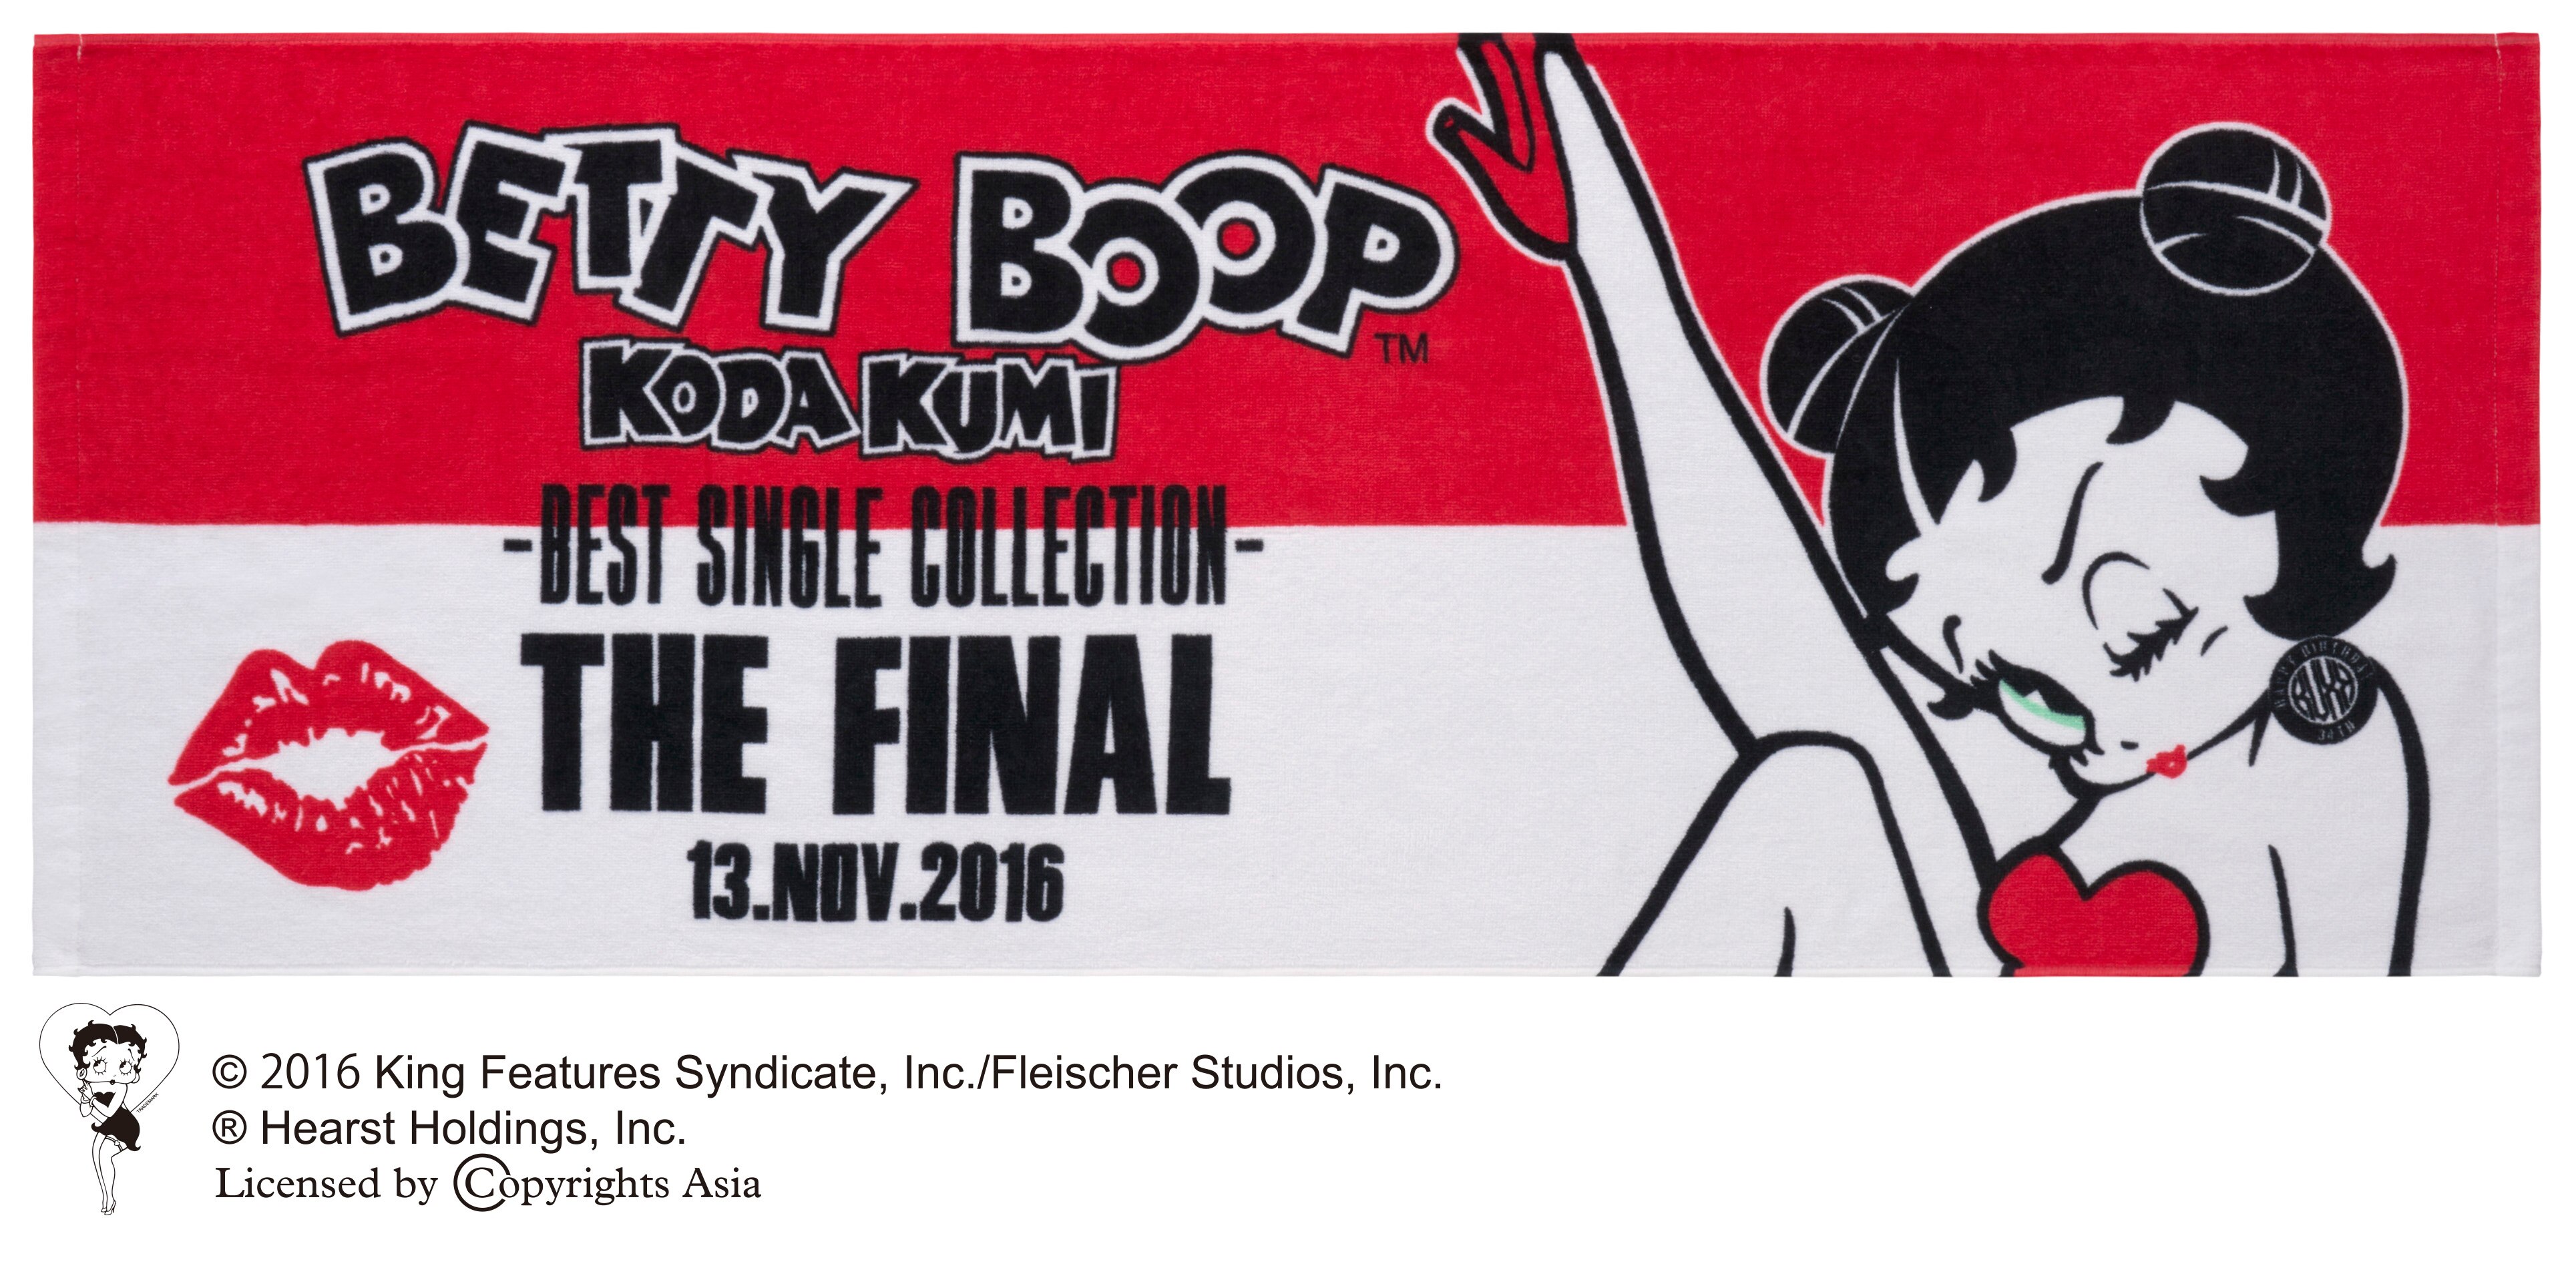 KODA KUMI LIVE TOUR 2016 BEST SINGLE COLLECTION –THE FINAL 